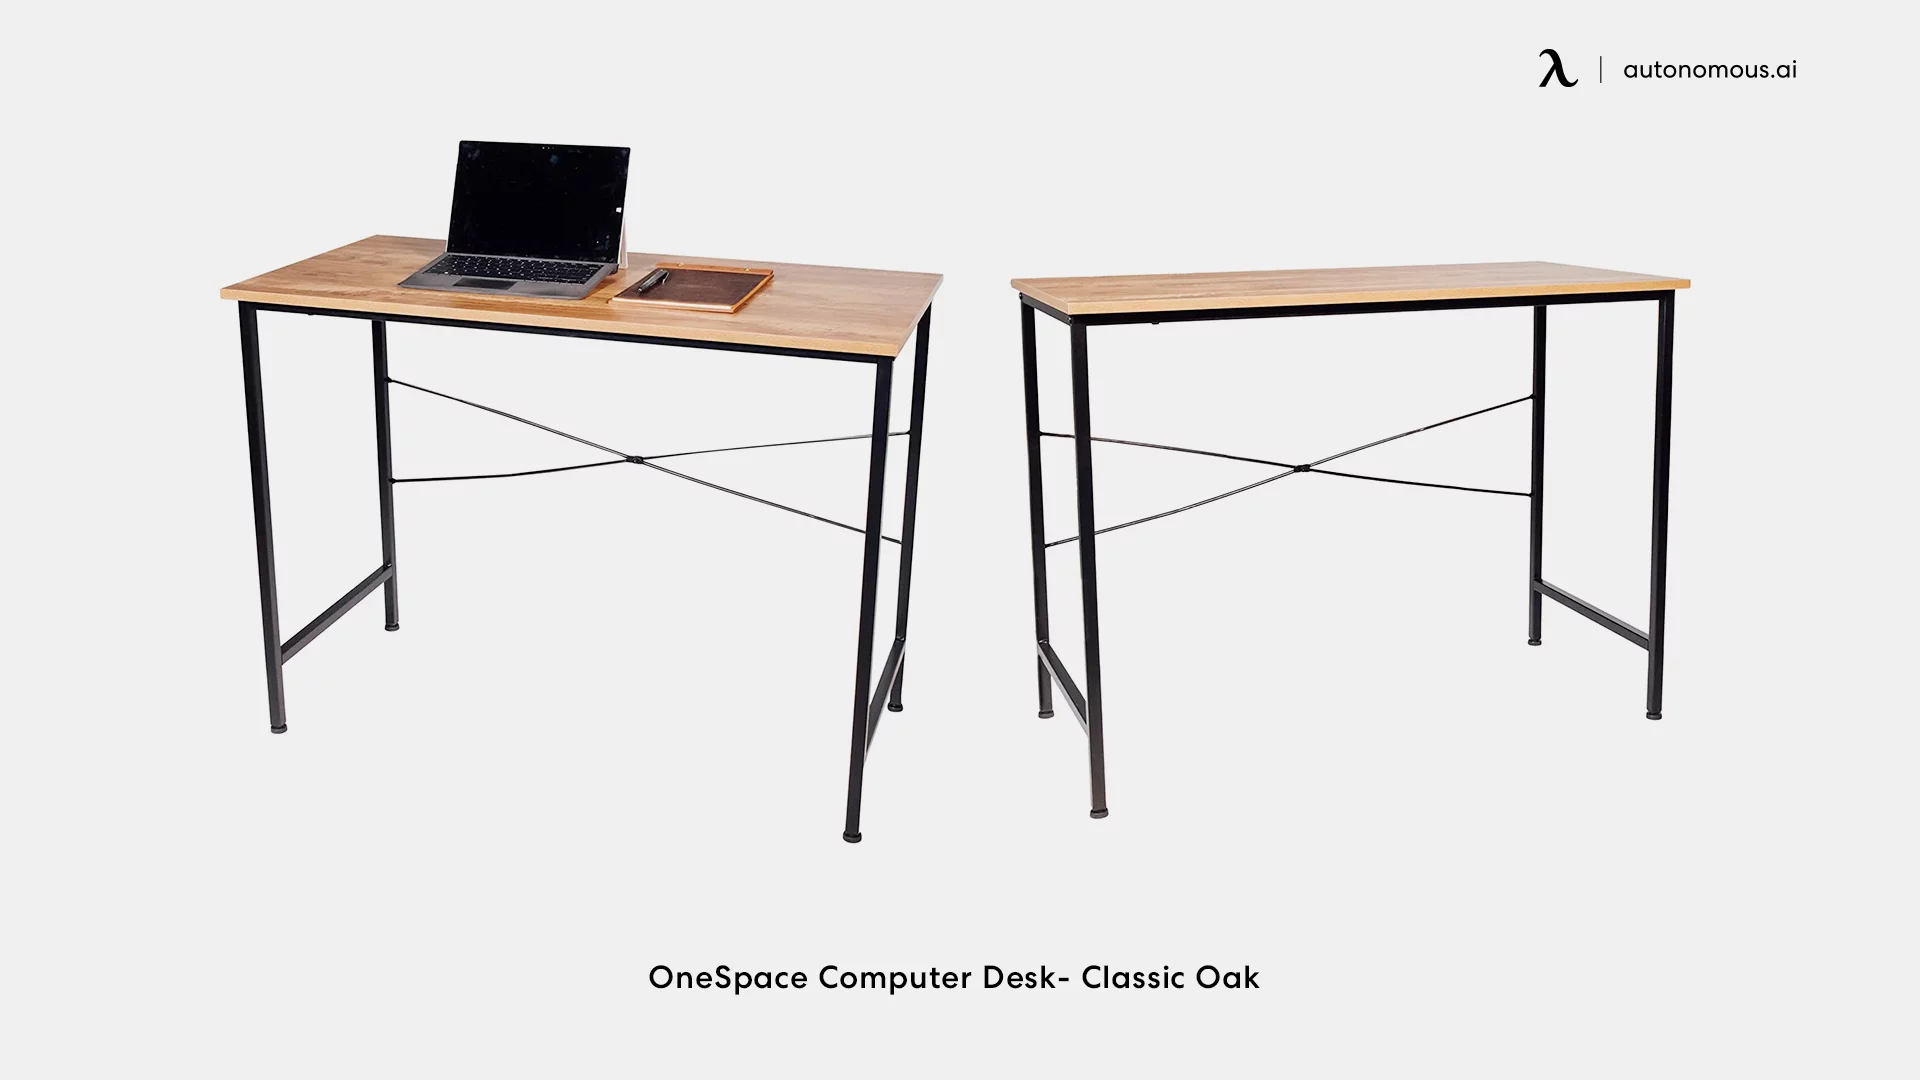 OneSpace Computer Desk- Classic Oak